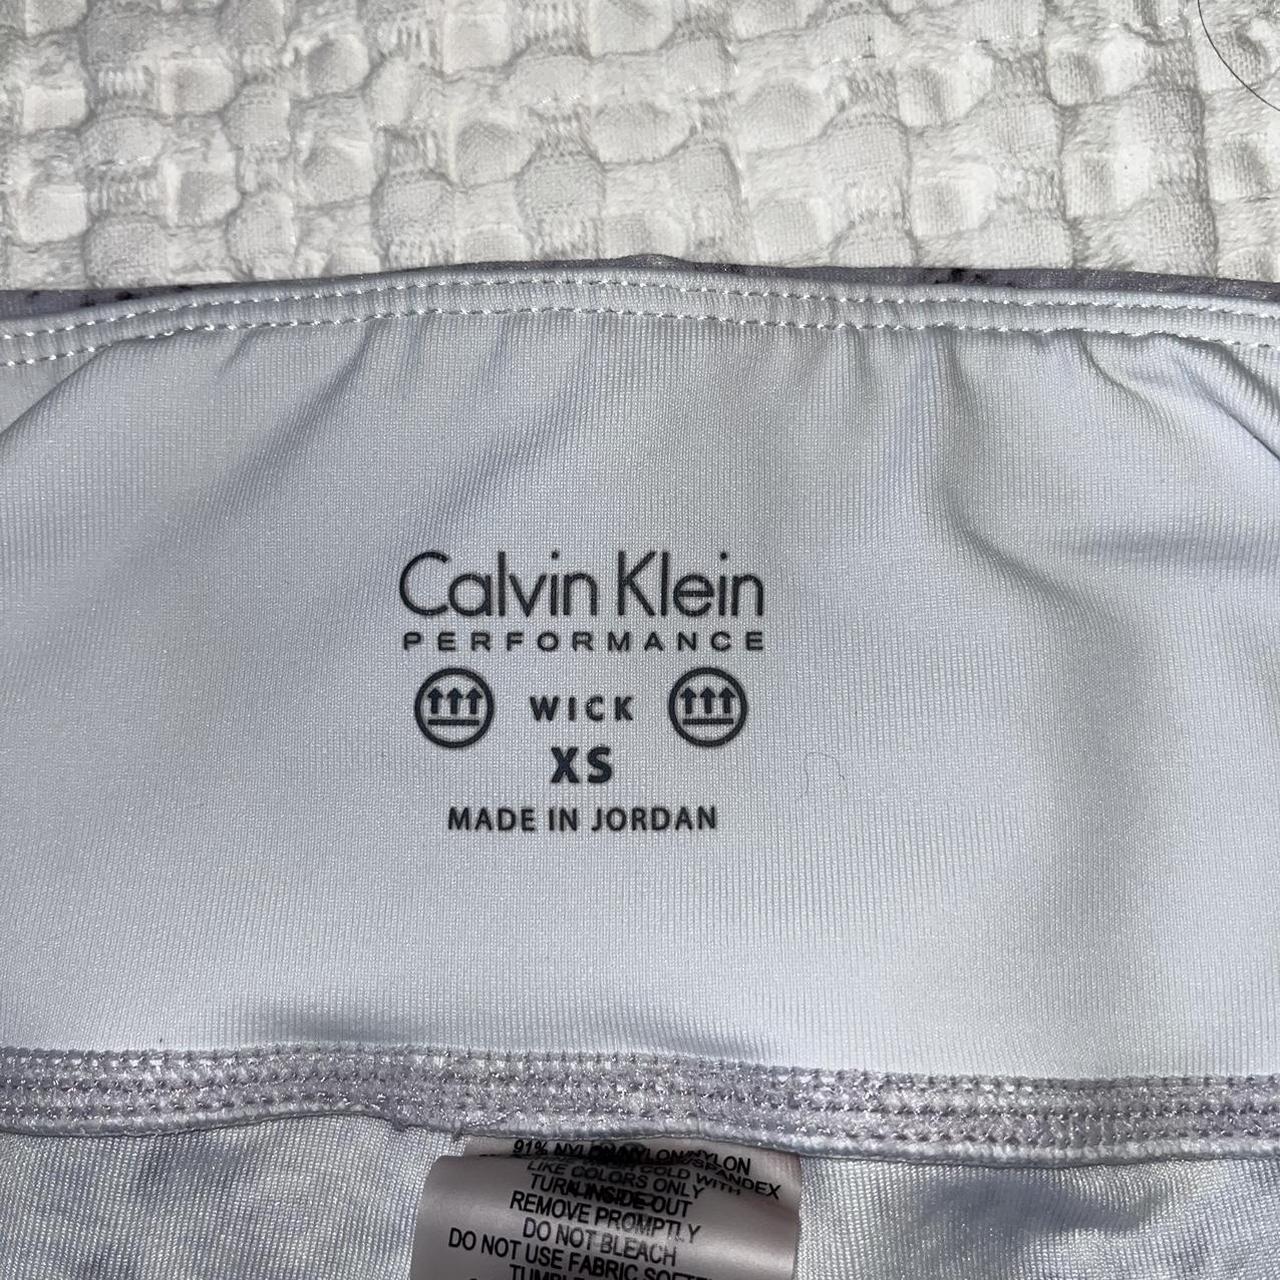 CALVIN KLEIN Performance wick leggings XS